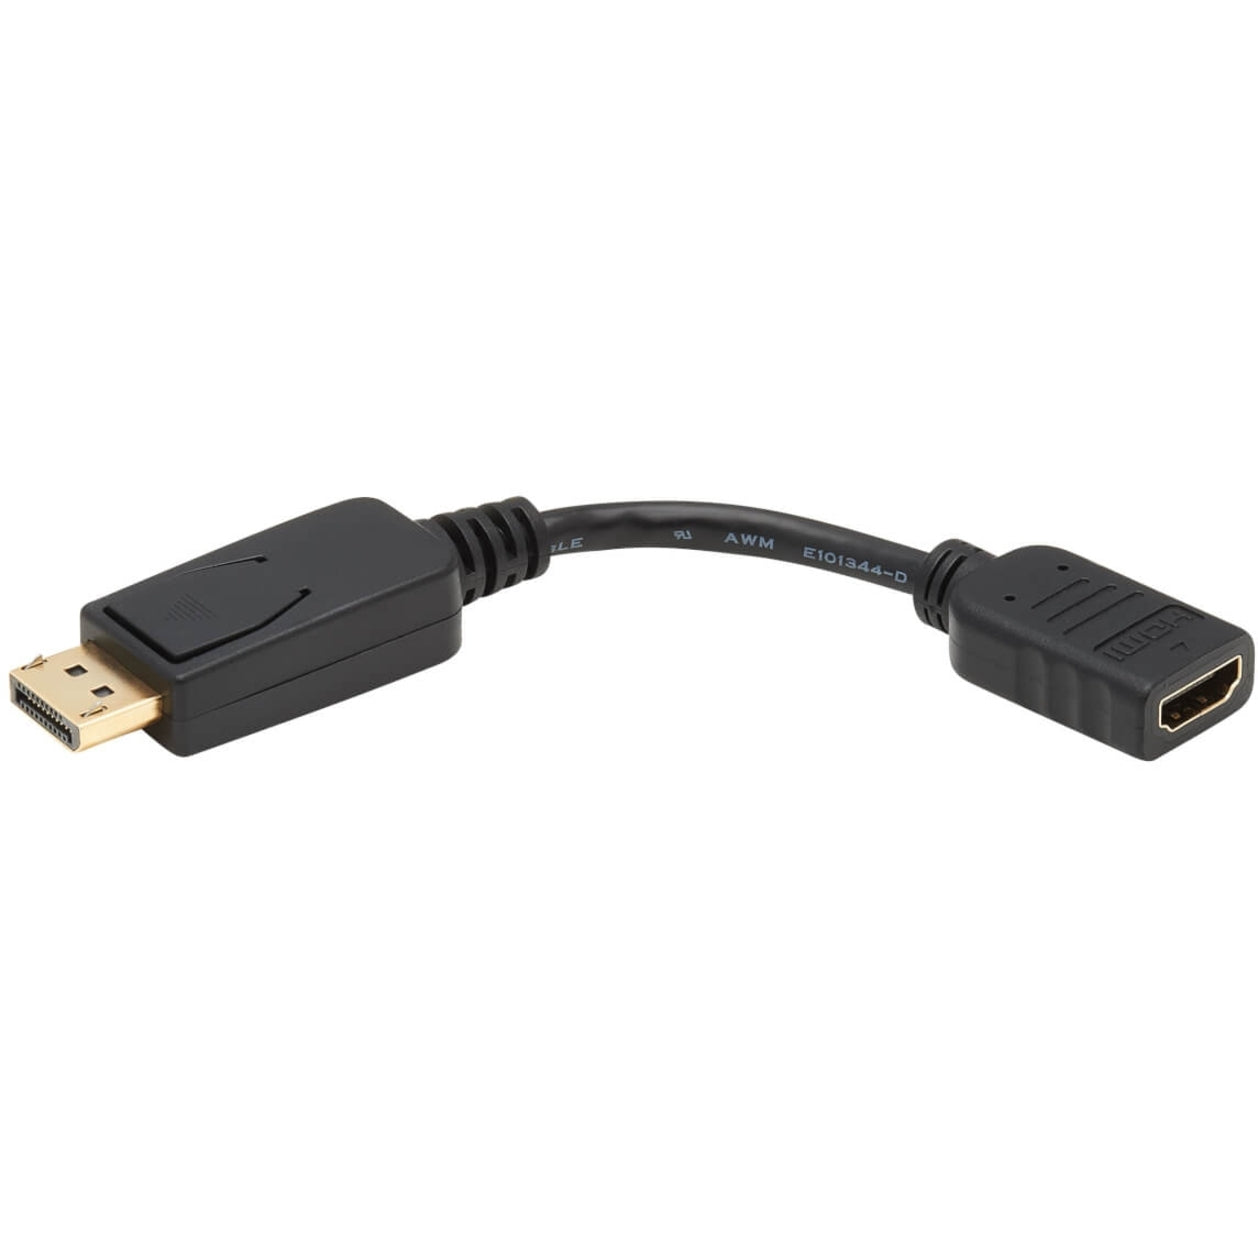 Tripp Lite P136-000 Adapter Cable, DisplayPort to HDMI, 1080p, 6"L, Black